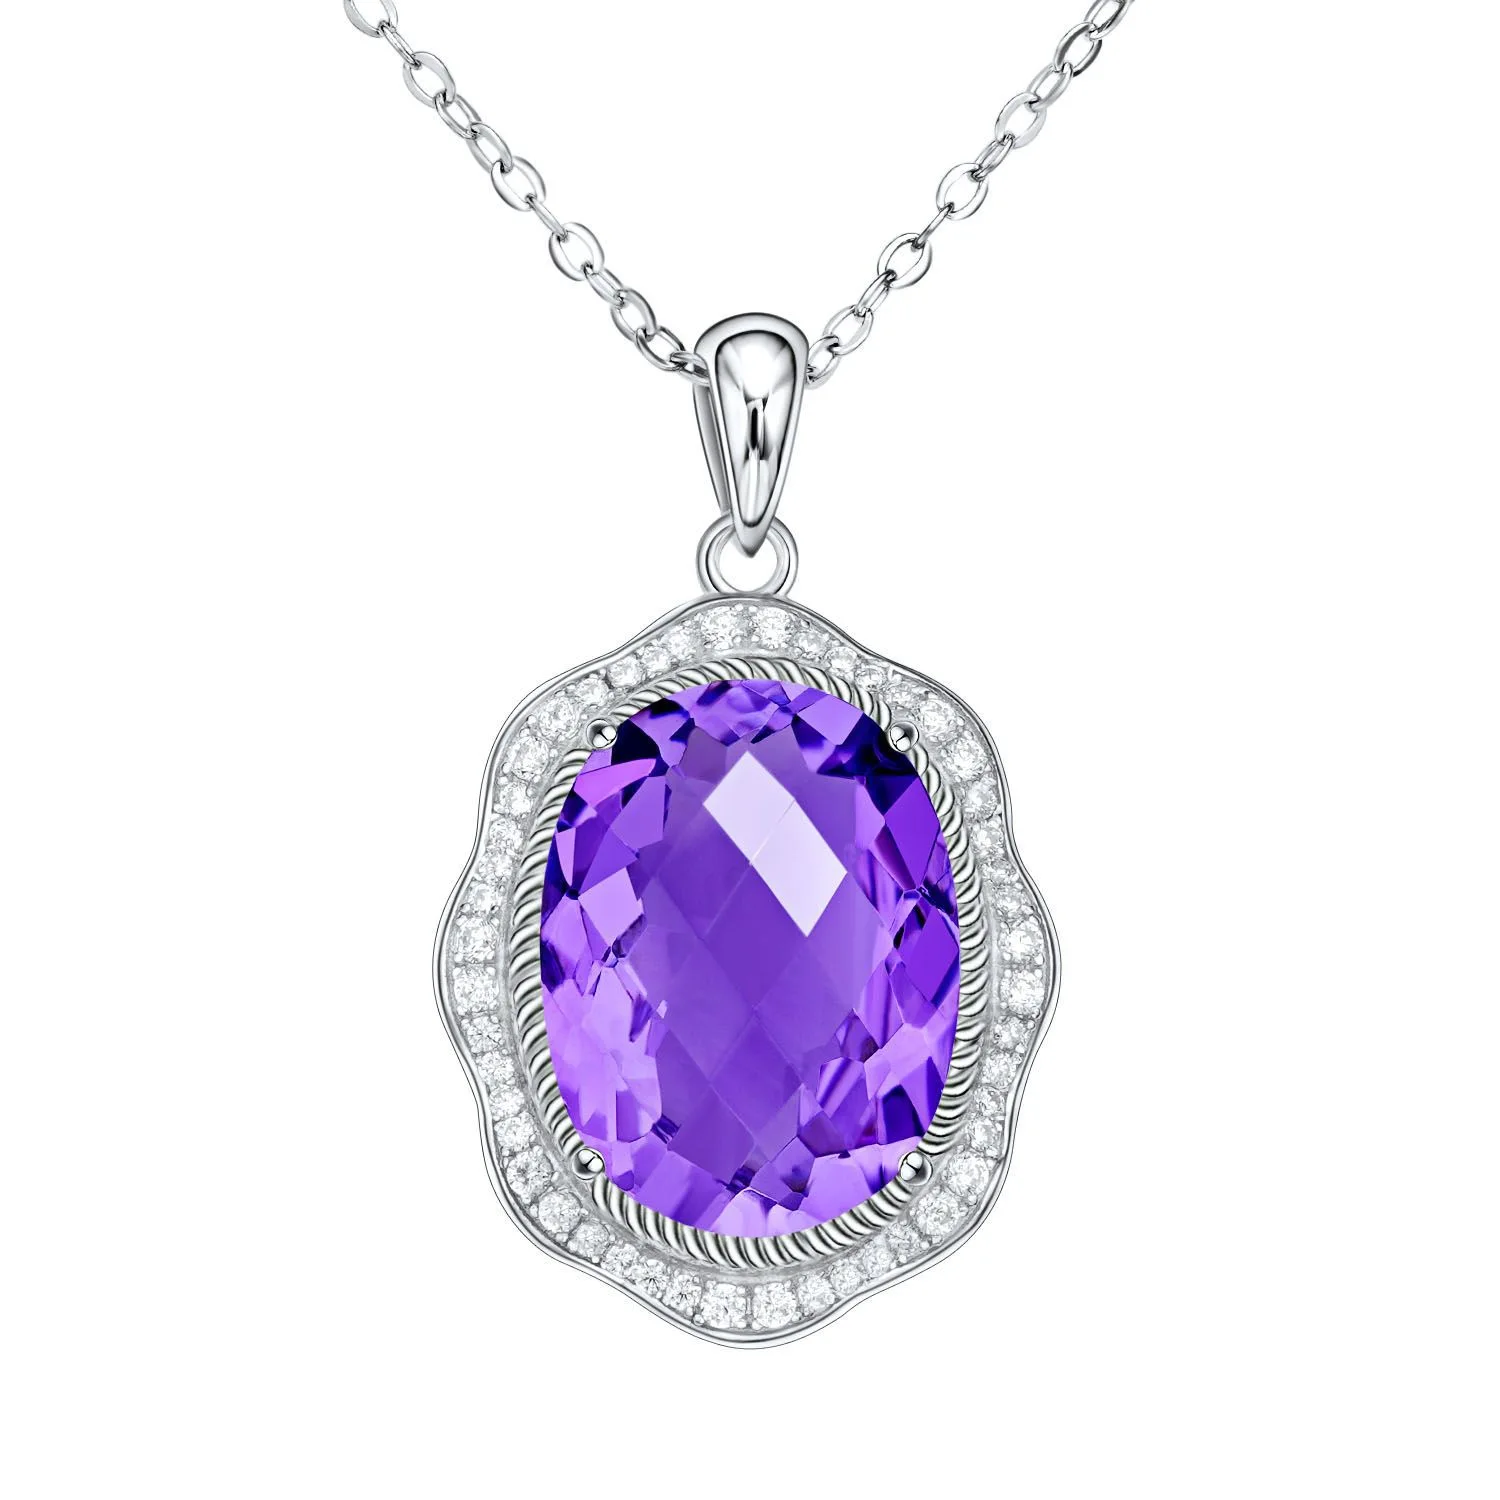 Elegant pendant necklace with amethyst birthstone - main